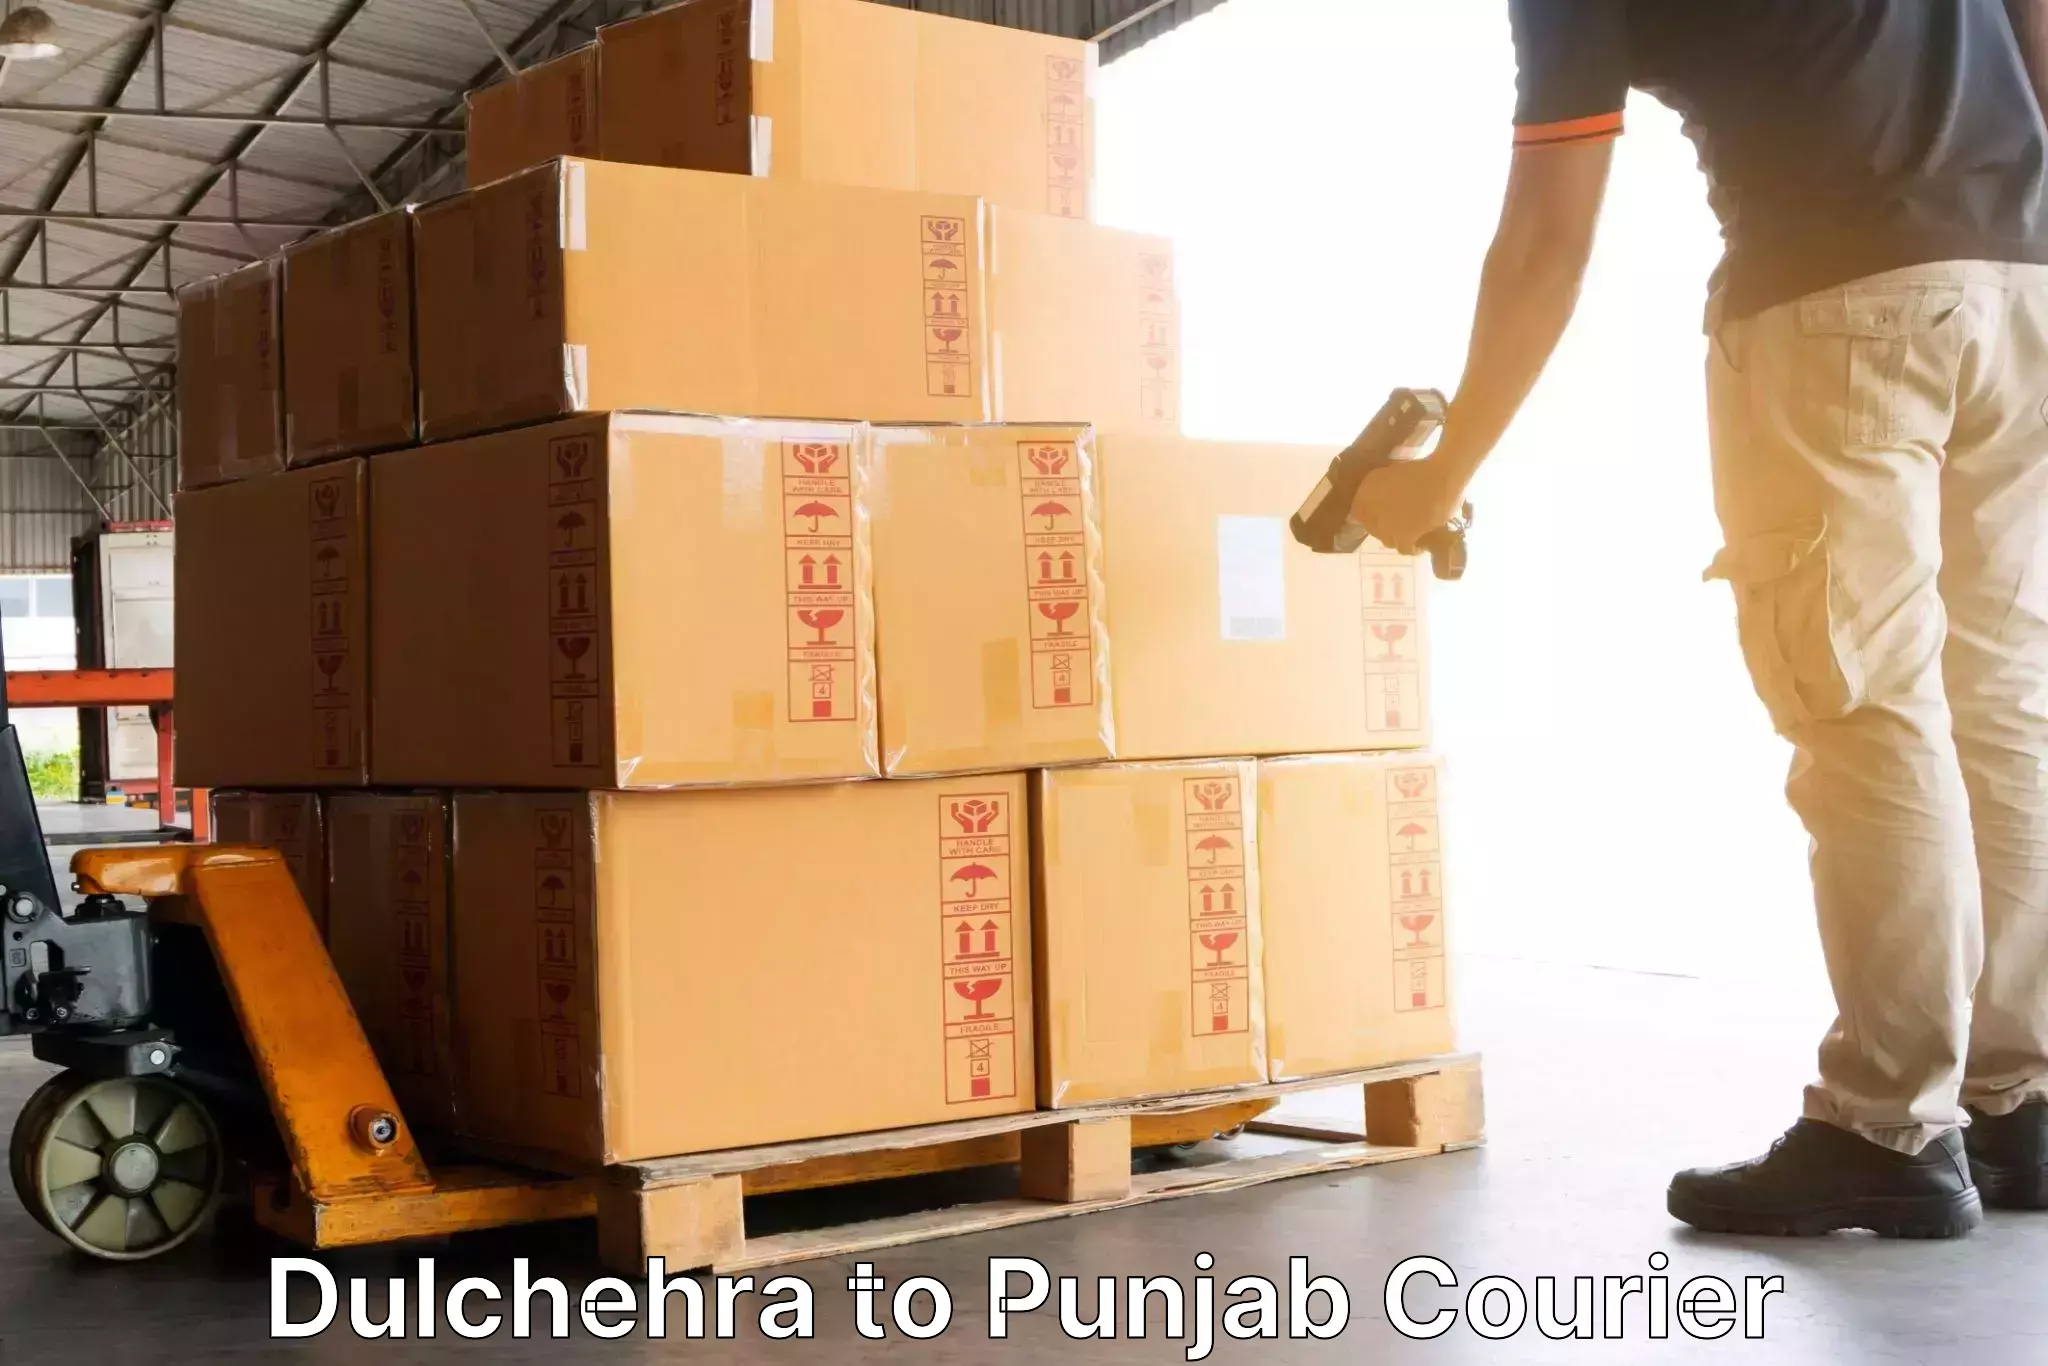 Weekend courier service Dulchehra to Amritsar